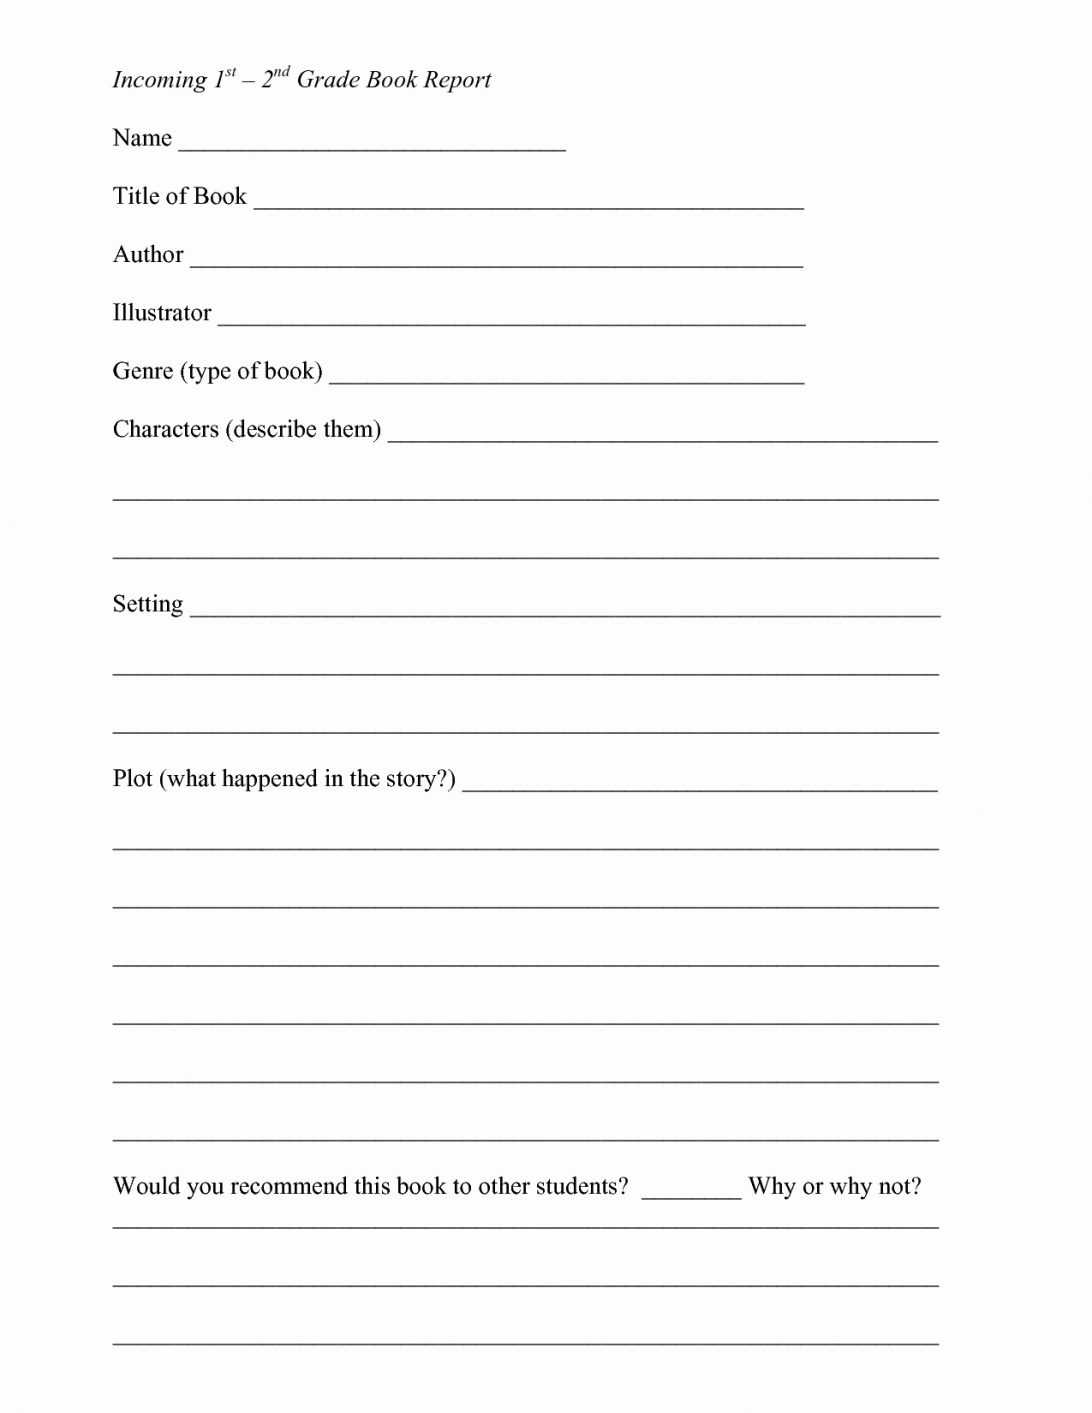 Fiction Book Report Template 6Th Grade For 7Th Graders Pdf Intended For Book Report Template High School